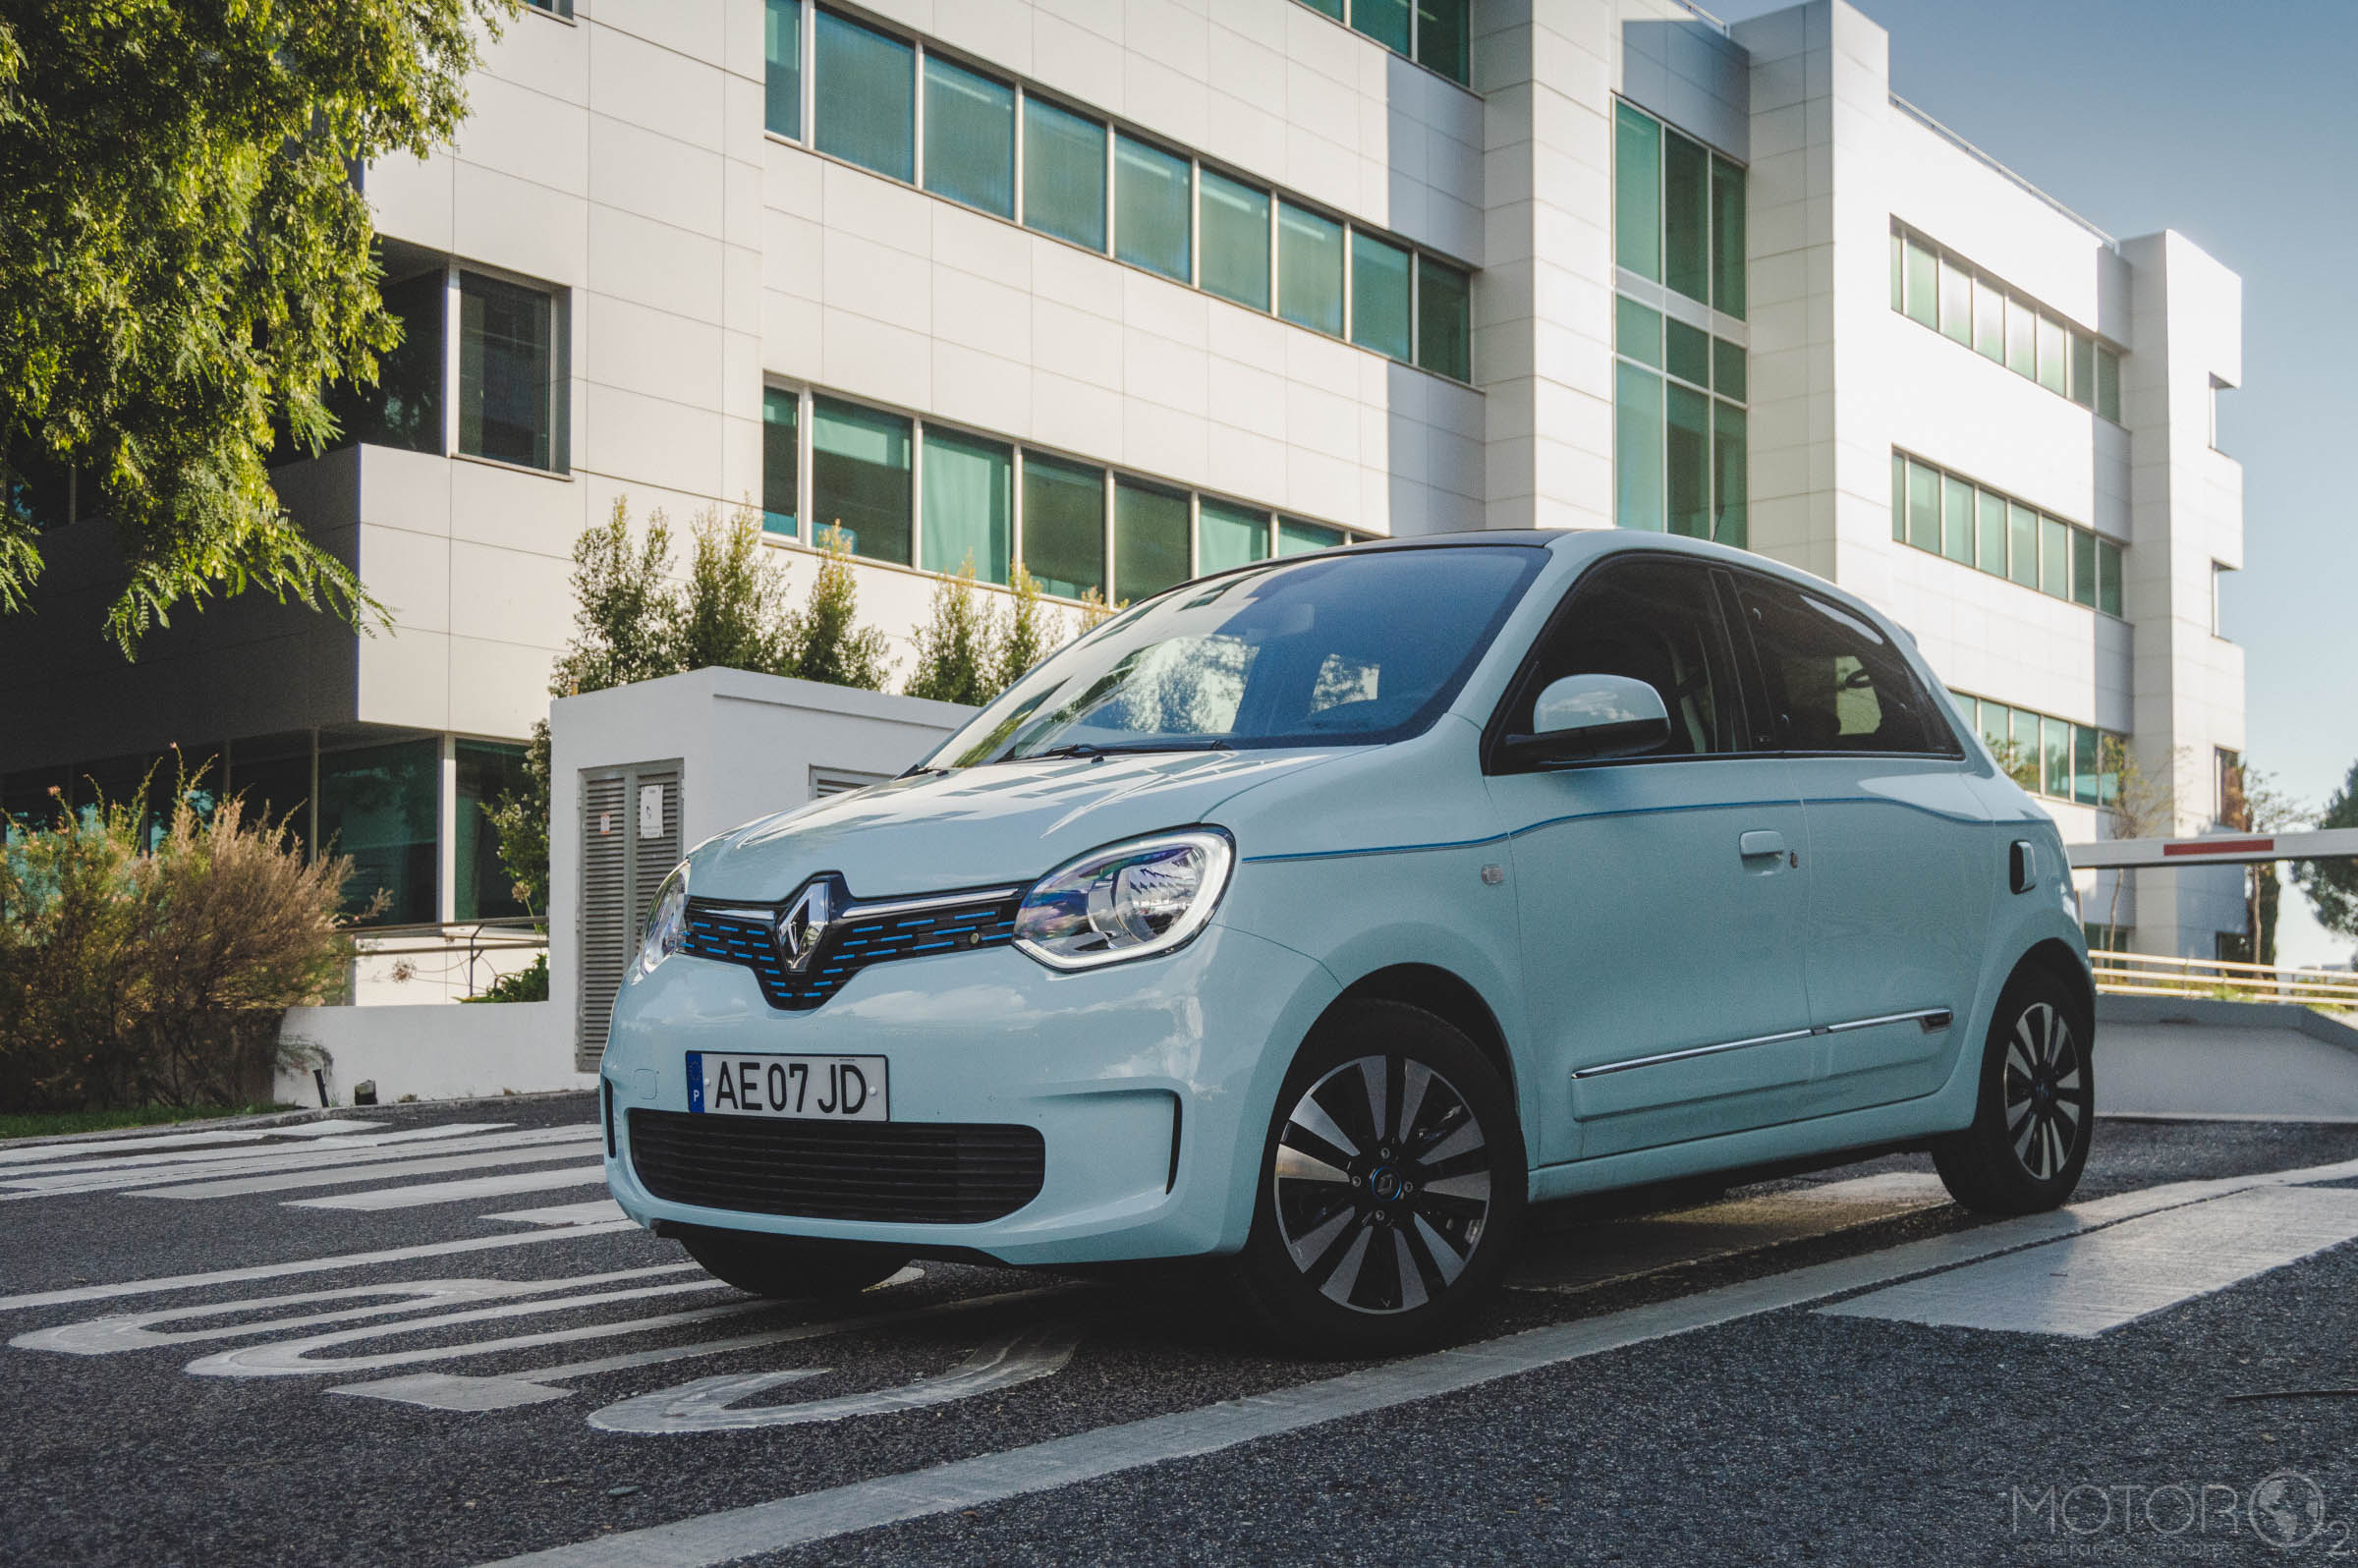 “É disto que as cidades precisam” – Teste ao Renault Twingo E-Tech Elétrico